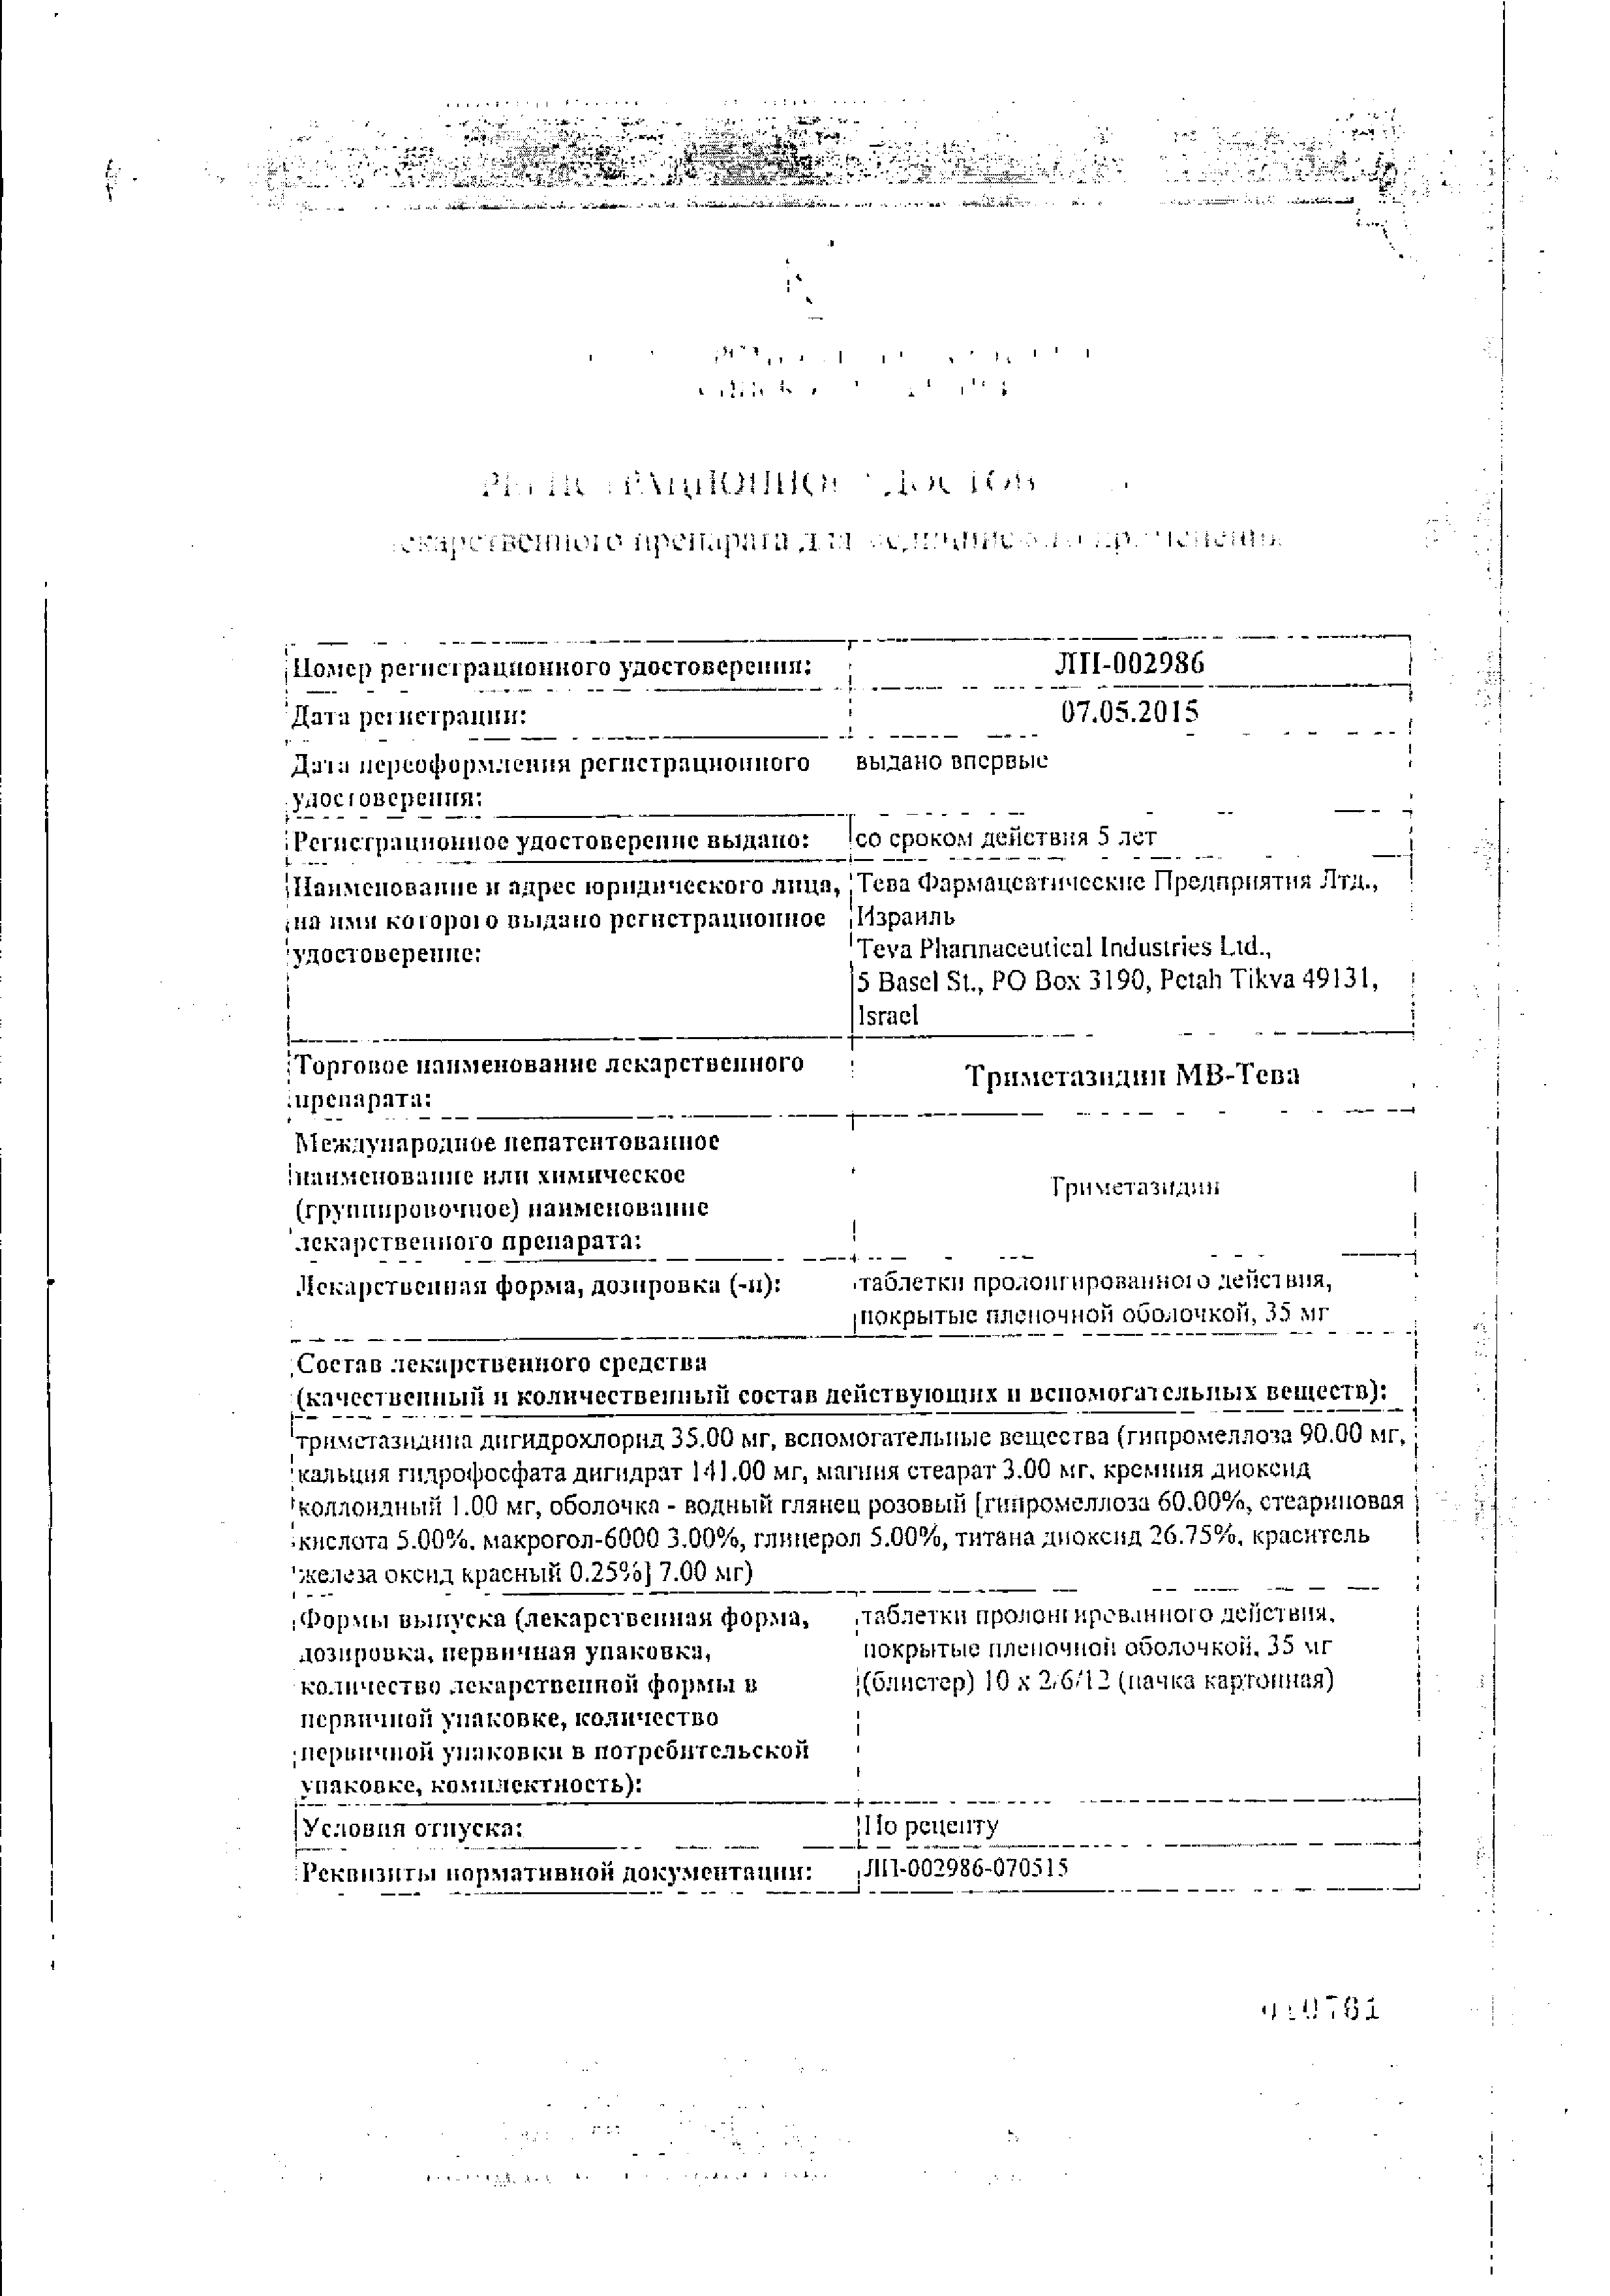 Триметазидин МВ-Тева сертификат